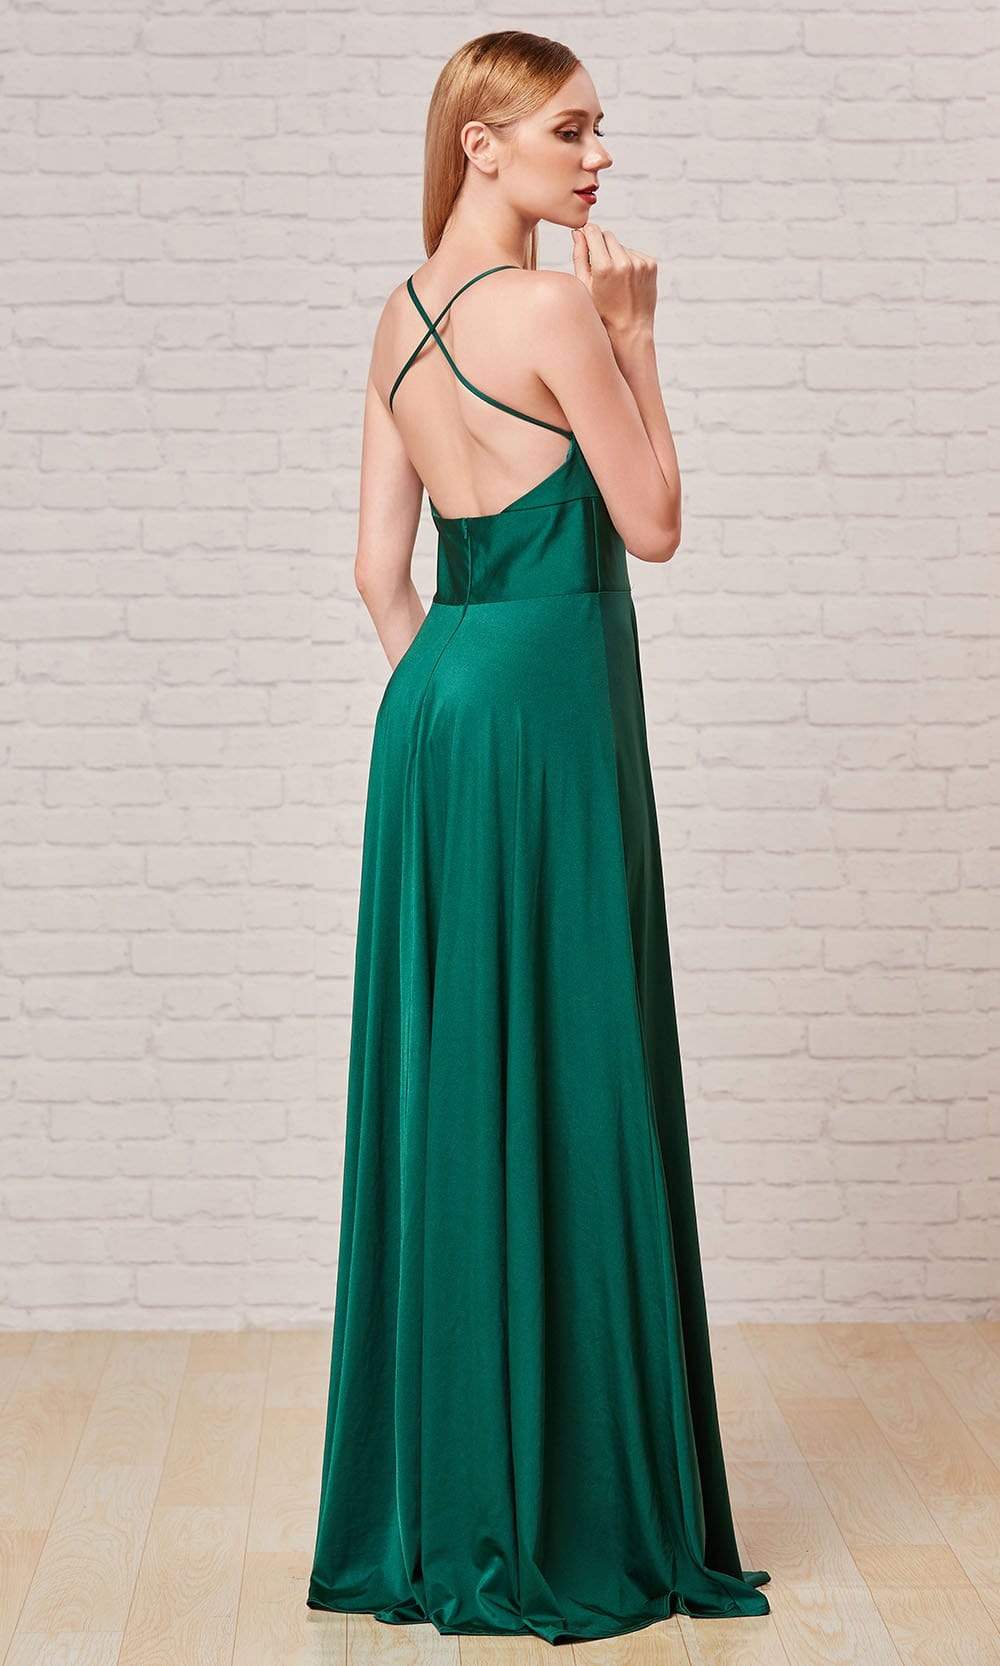 J'Adore Dresses - J18042 Plunging V-Neck Empire High Slit Gown ...